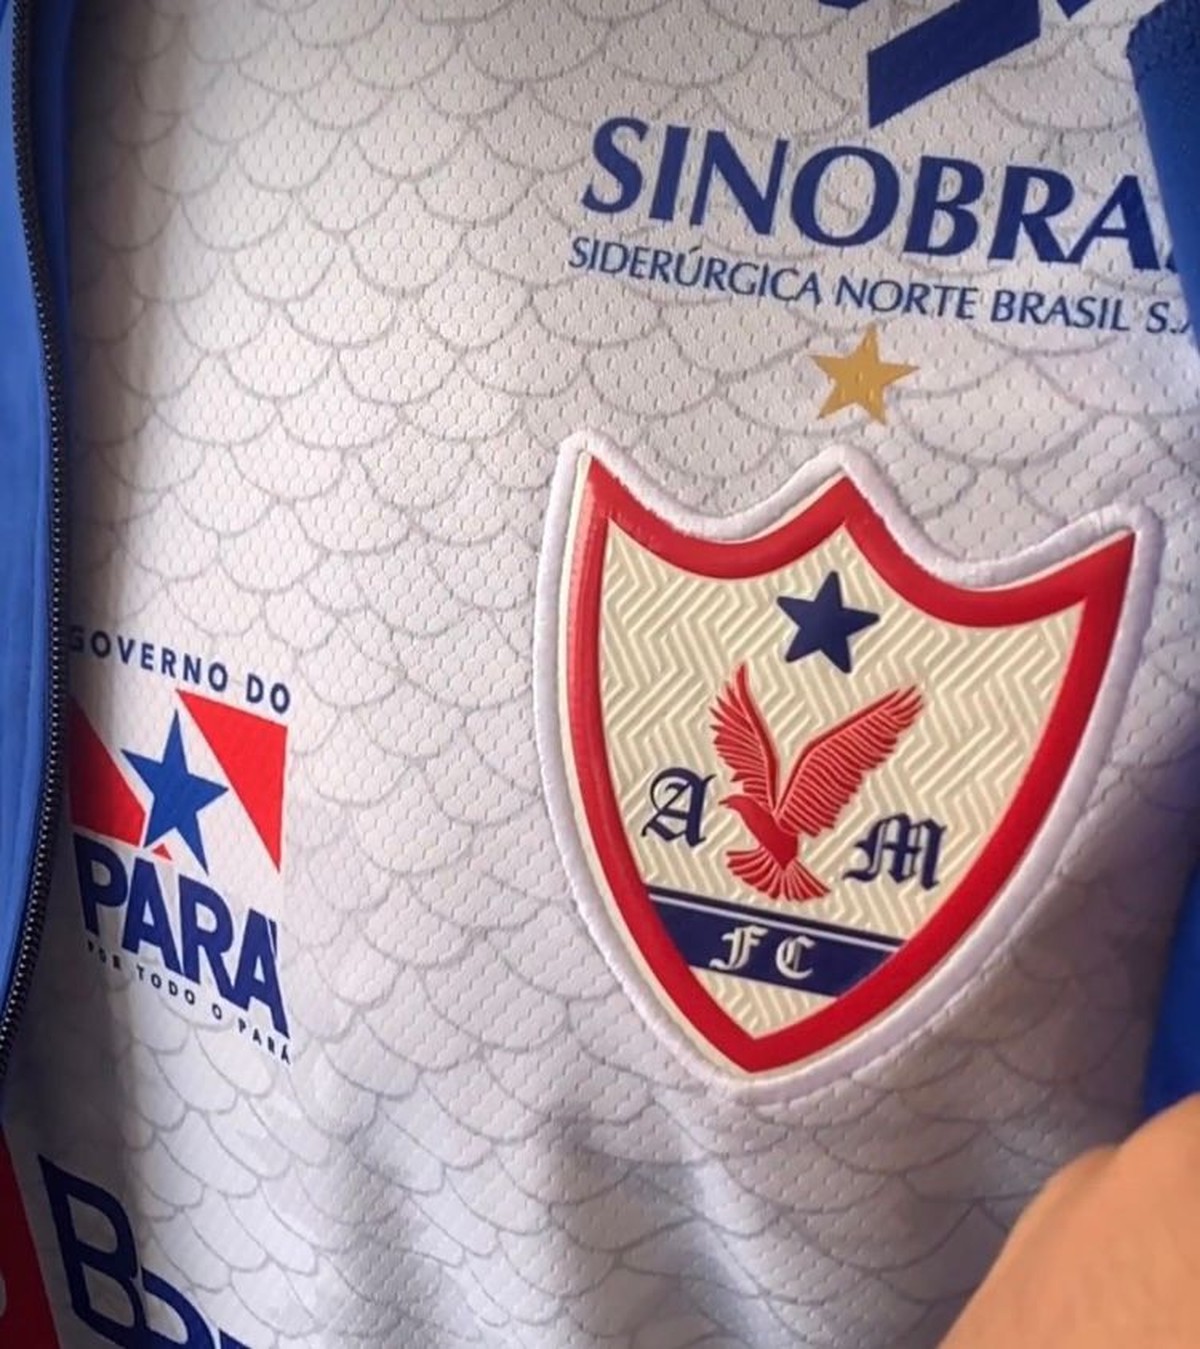 Águia de Marabá Futebol Clube - Wikipedia